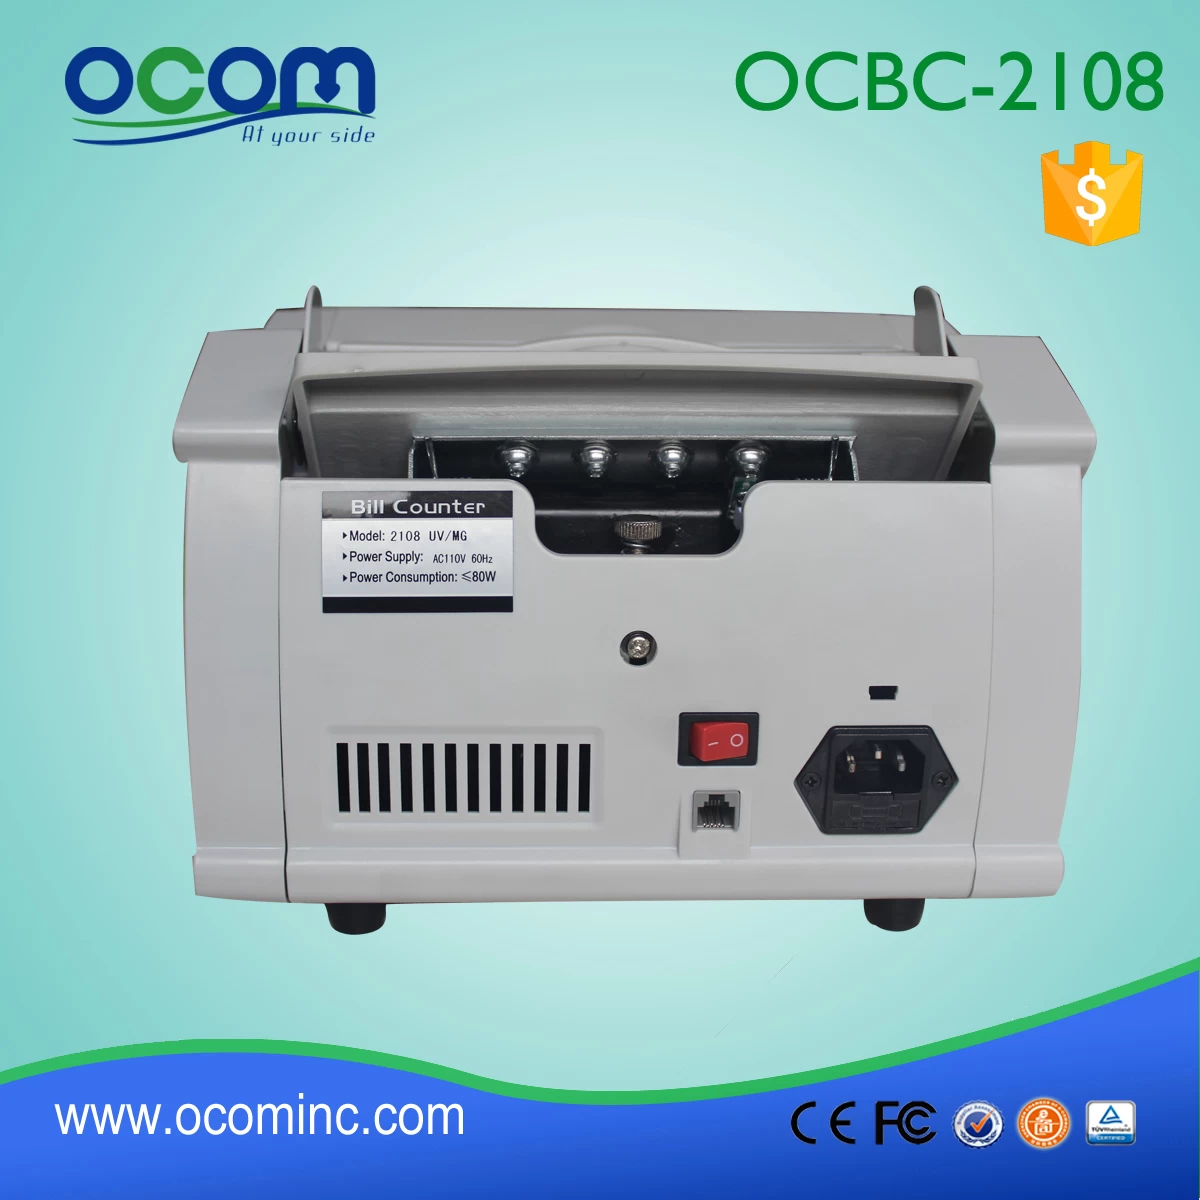 OCBC-2108 cheap money counter made in China